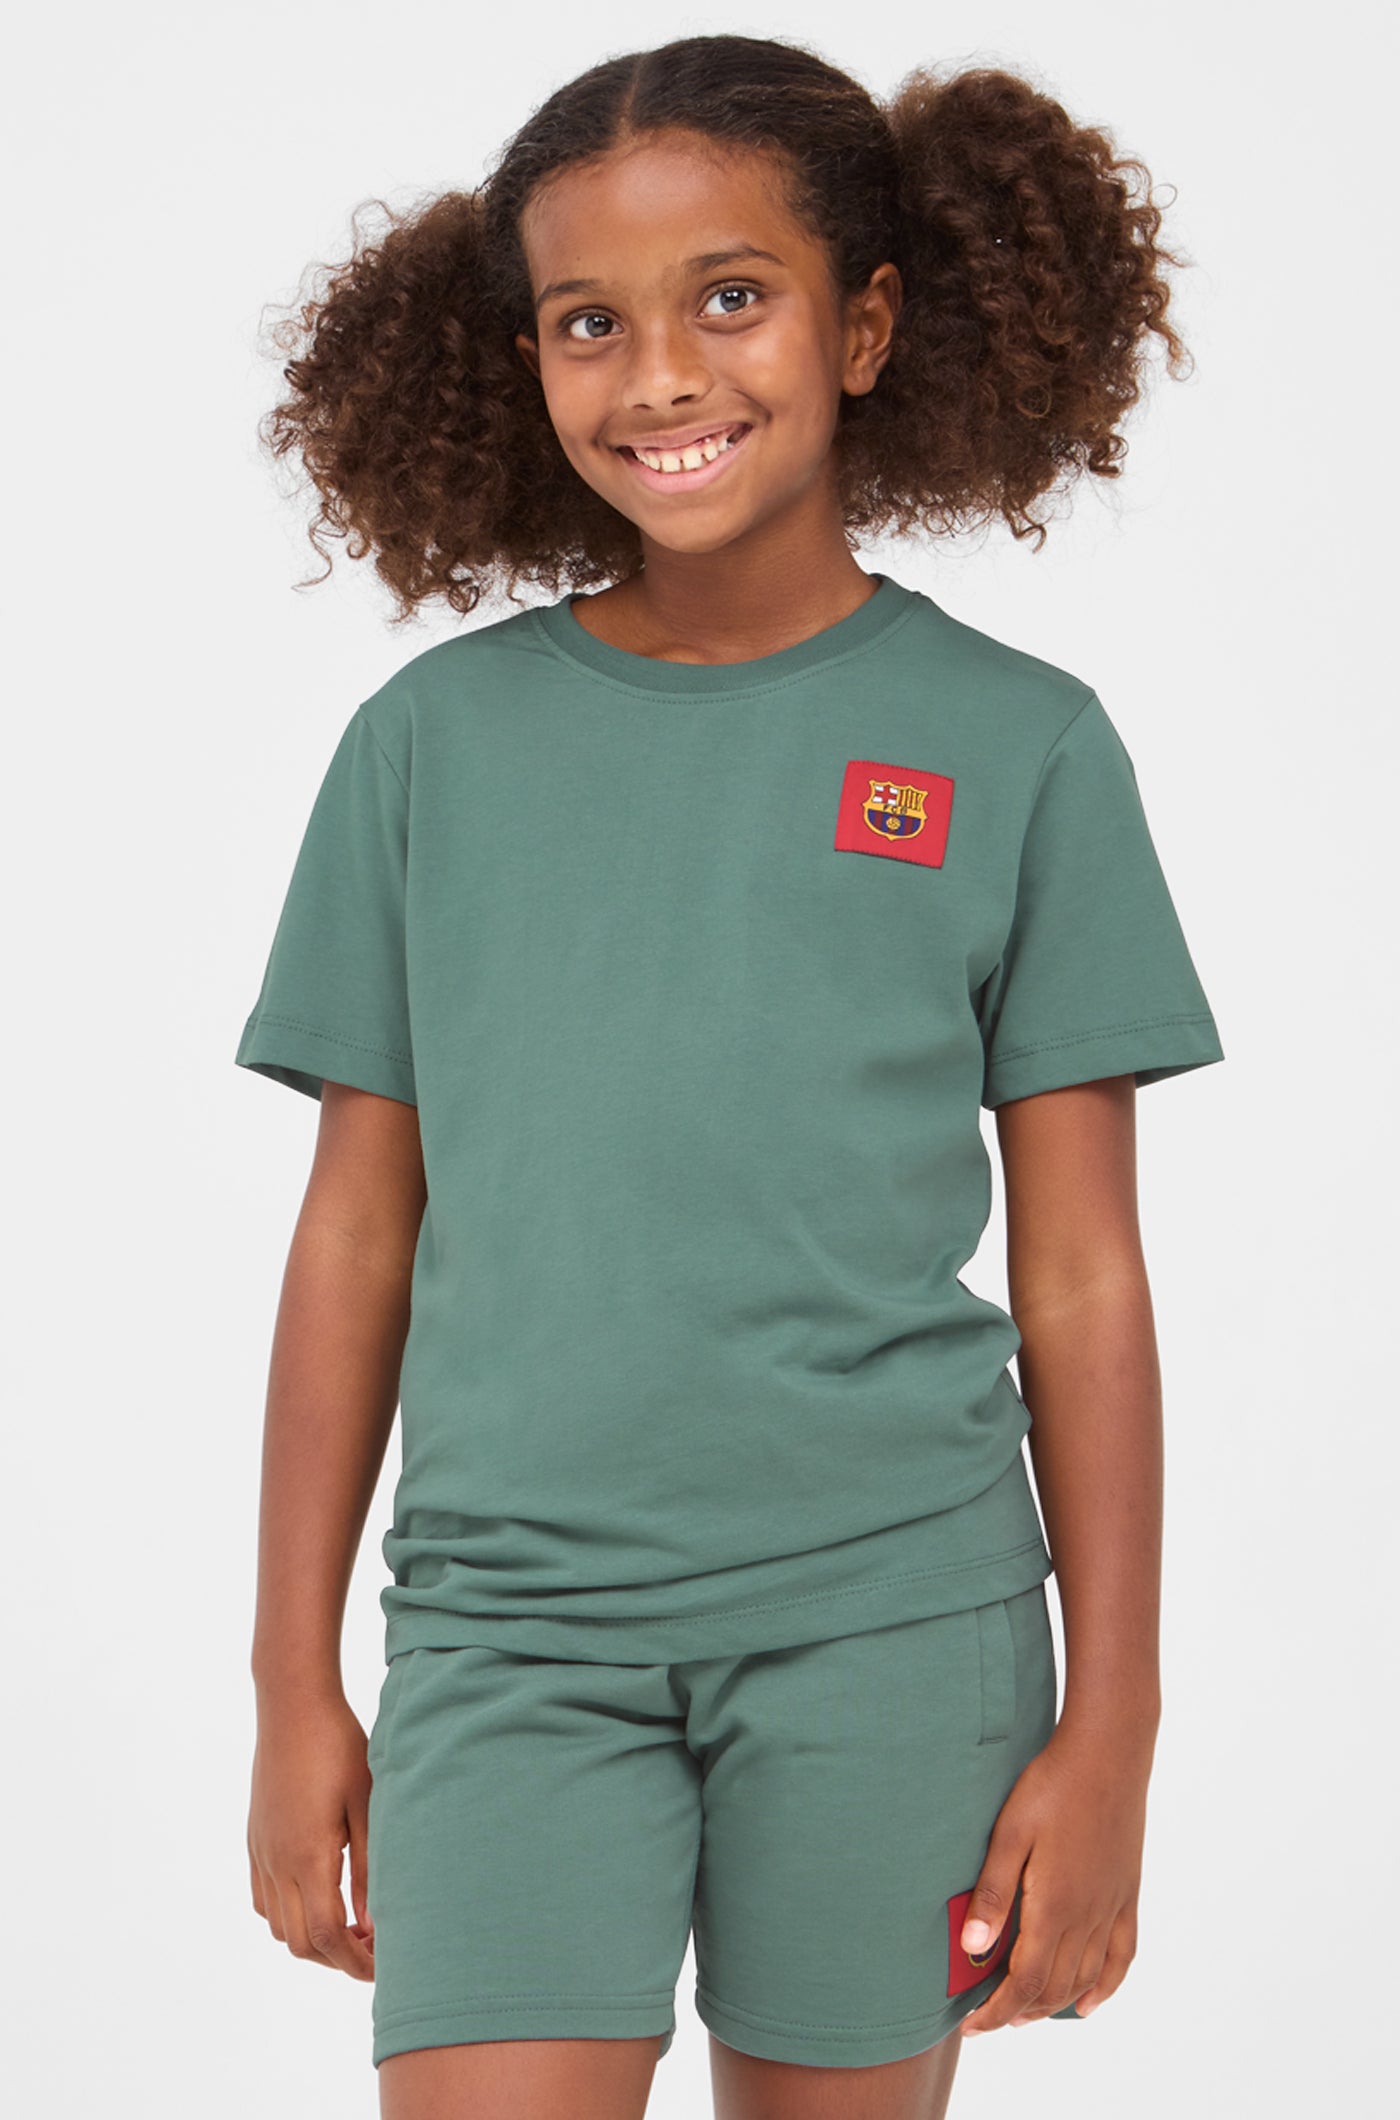 Camiseta verde dinos Barça - Junior